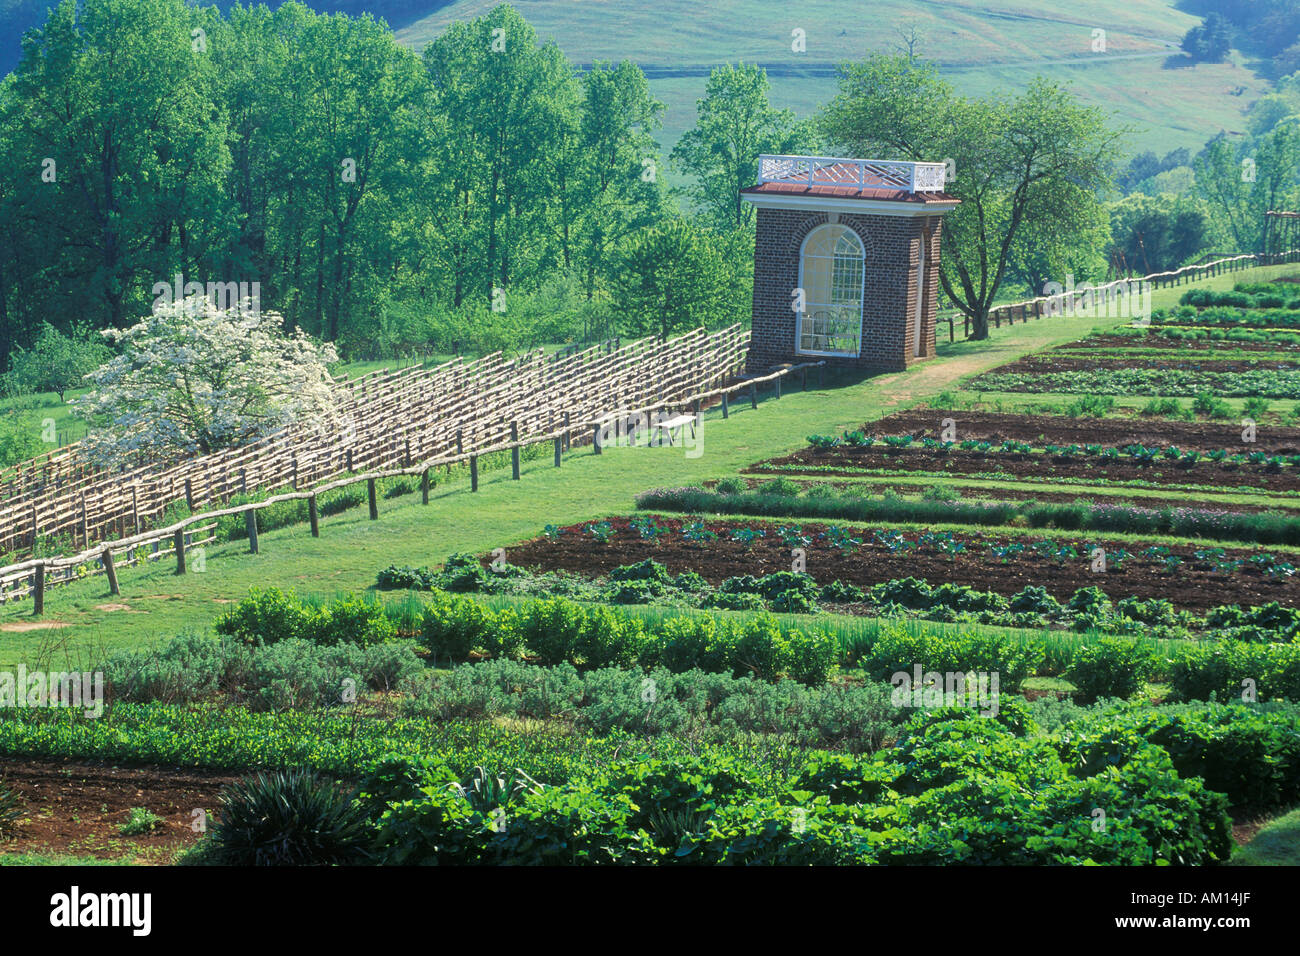 Vegetable garden and pavilion at Monticello home of Thomas Jefferson Charlottesville Virginia Stock Photo